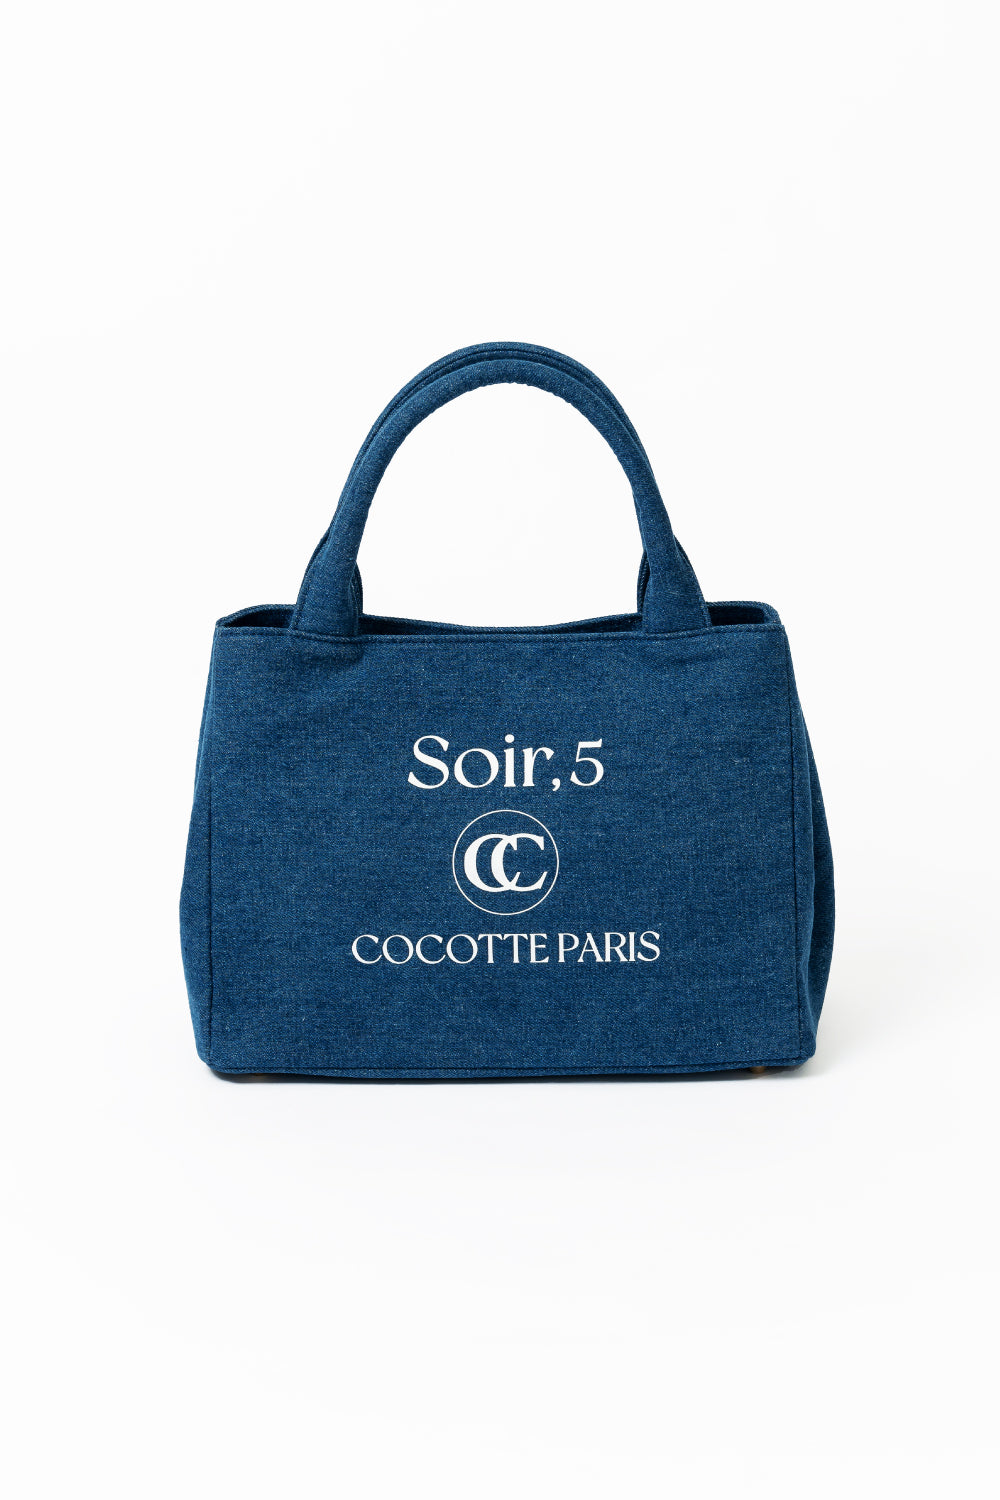 Soir,5 COCOTTE PARIS 完売 ロゴデニムトートバッグ